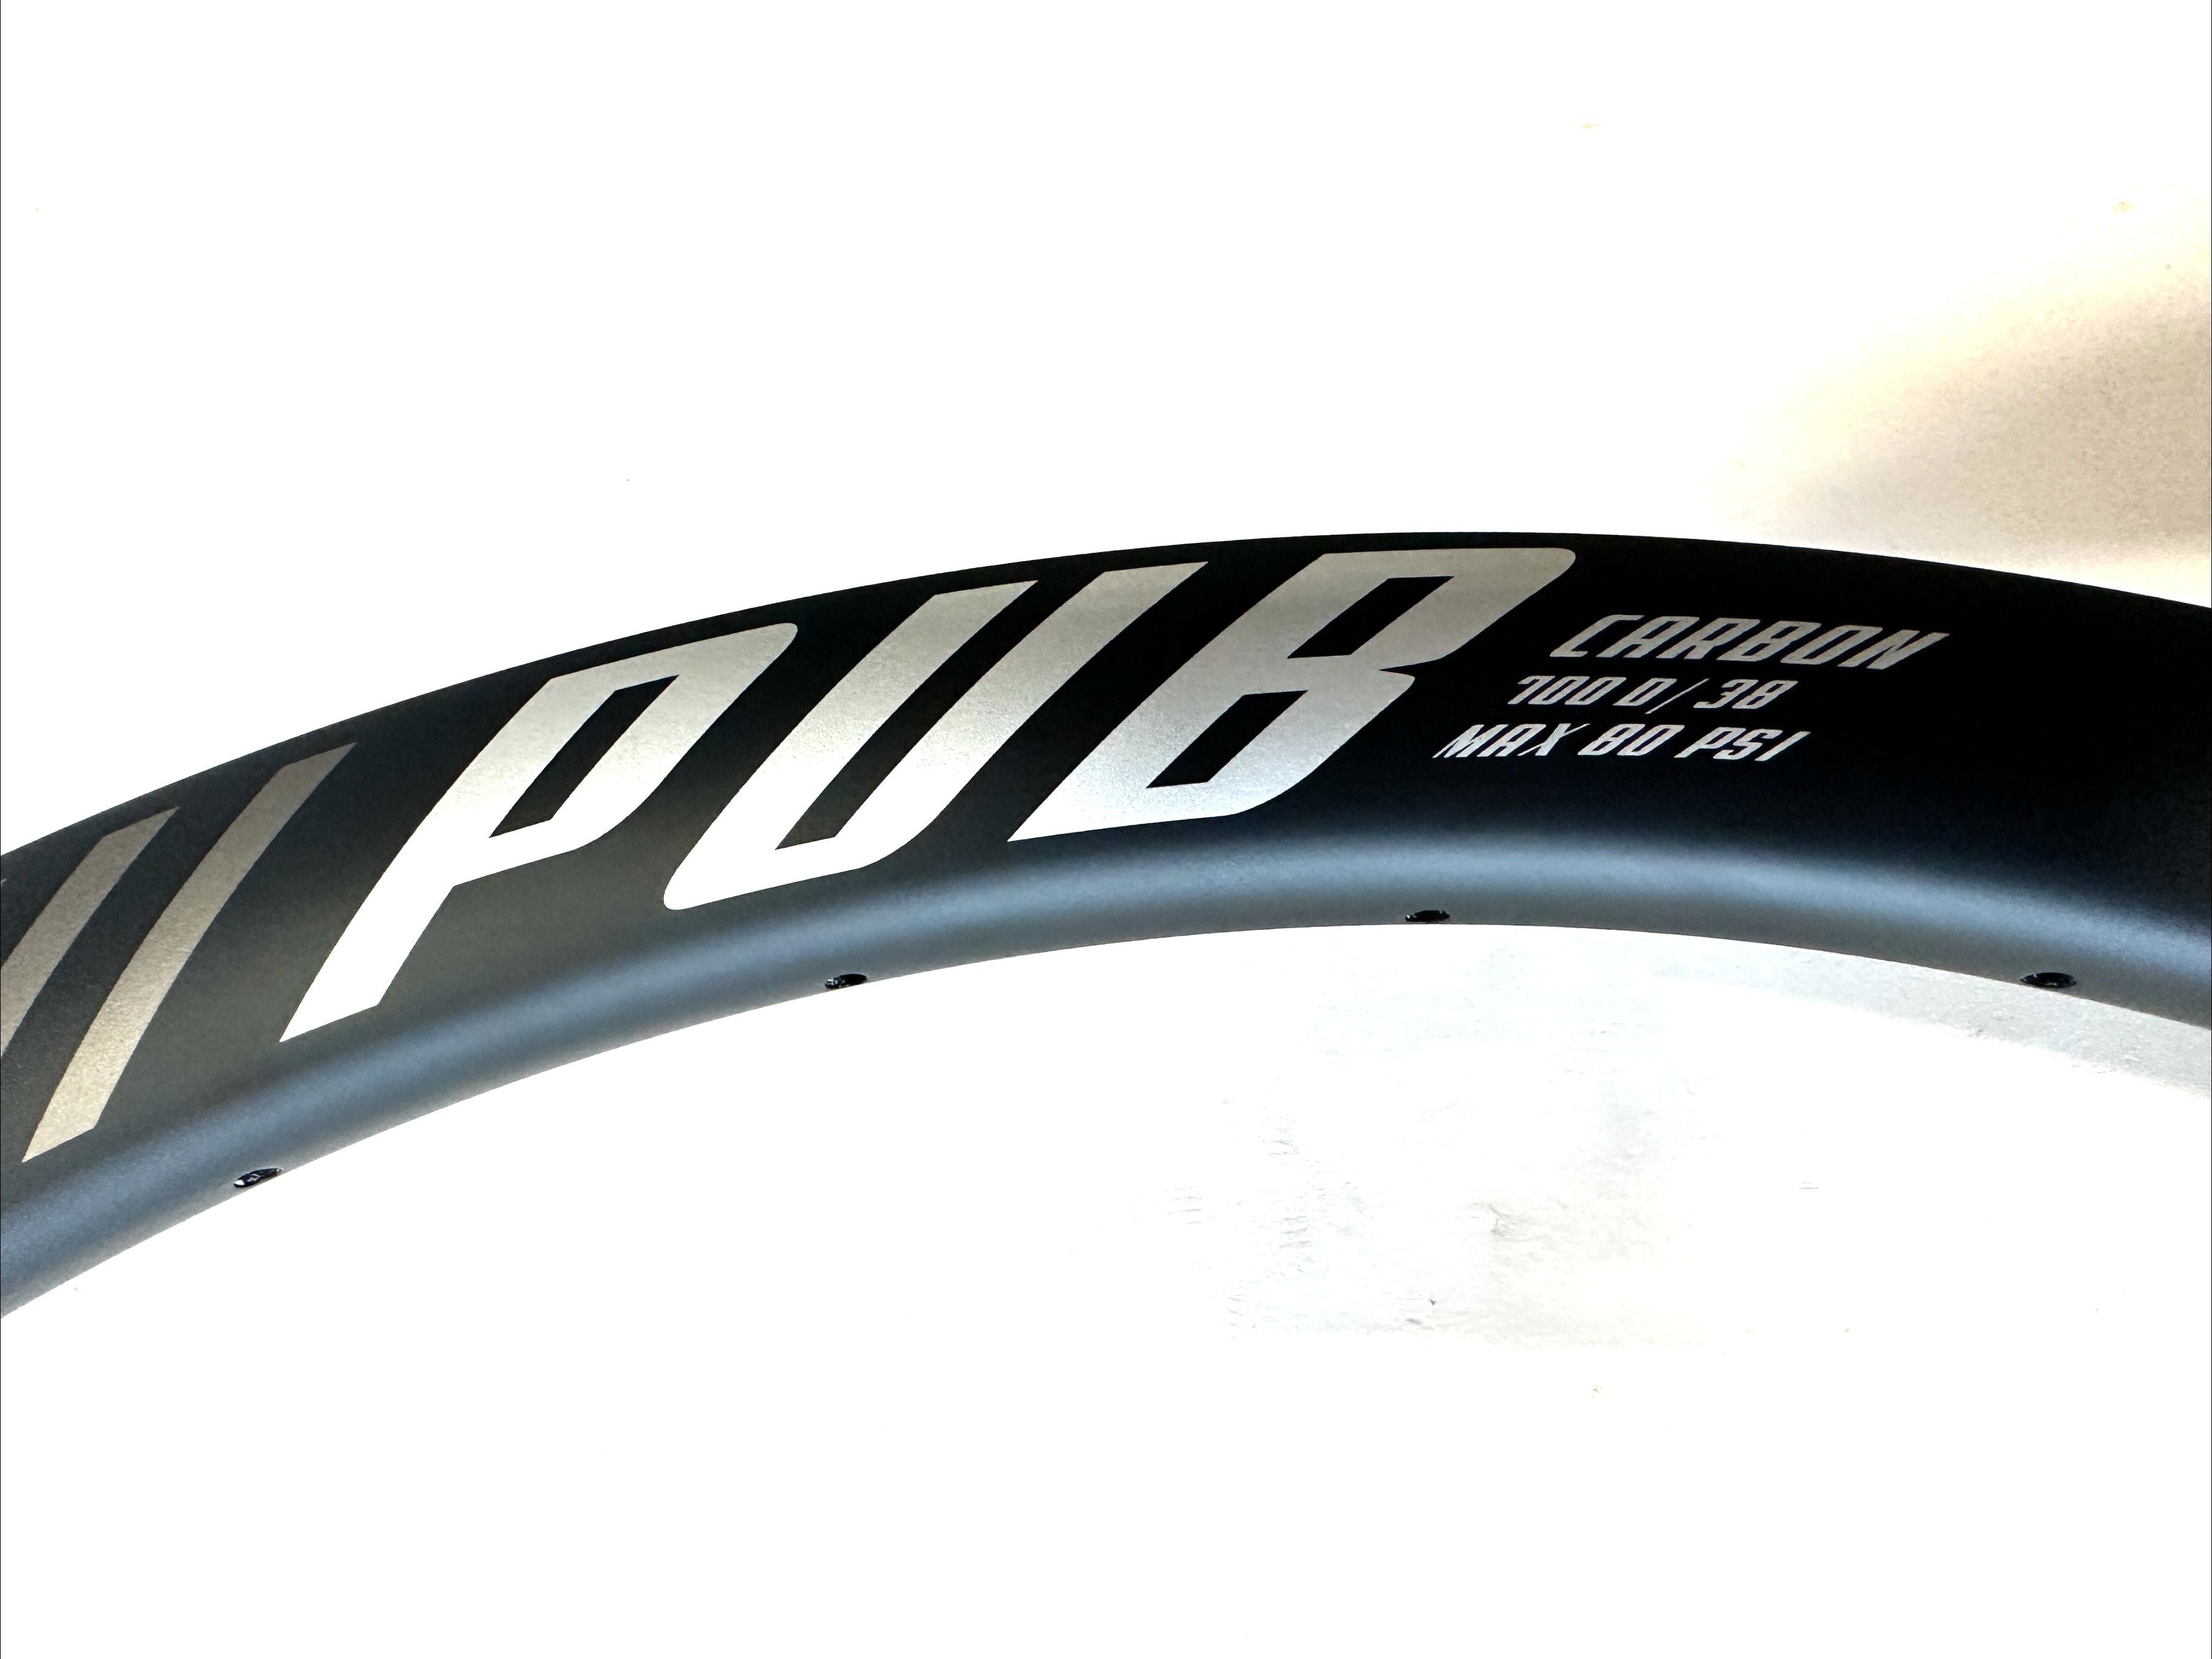 PUB GRAVEL 700D/38 Carbon Clincher Bike 80 PSI Wheel Rim Brakes 28 Spoke NEW